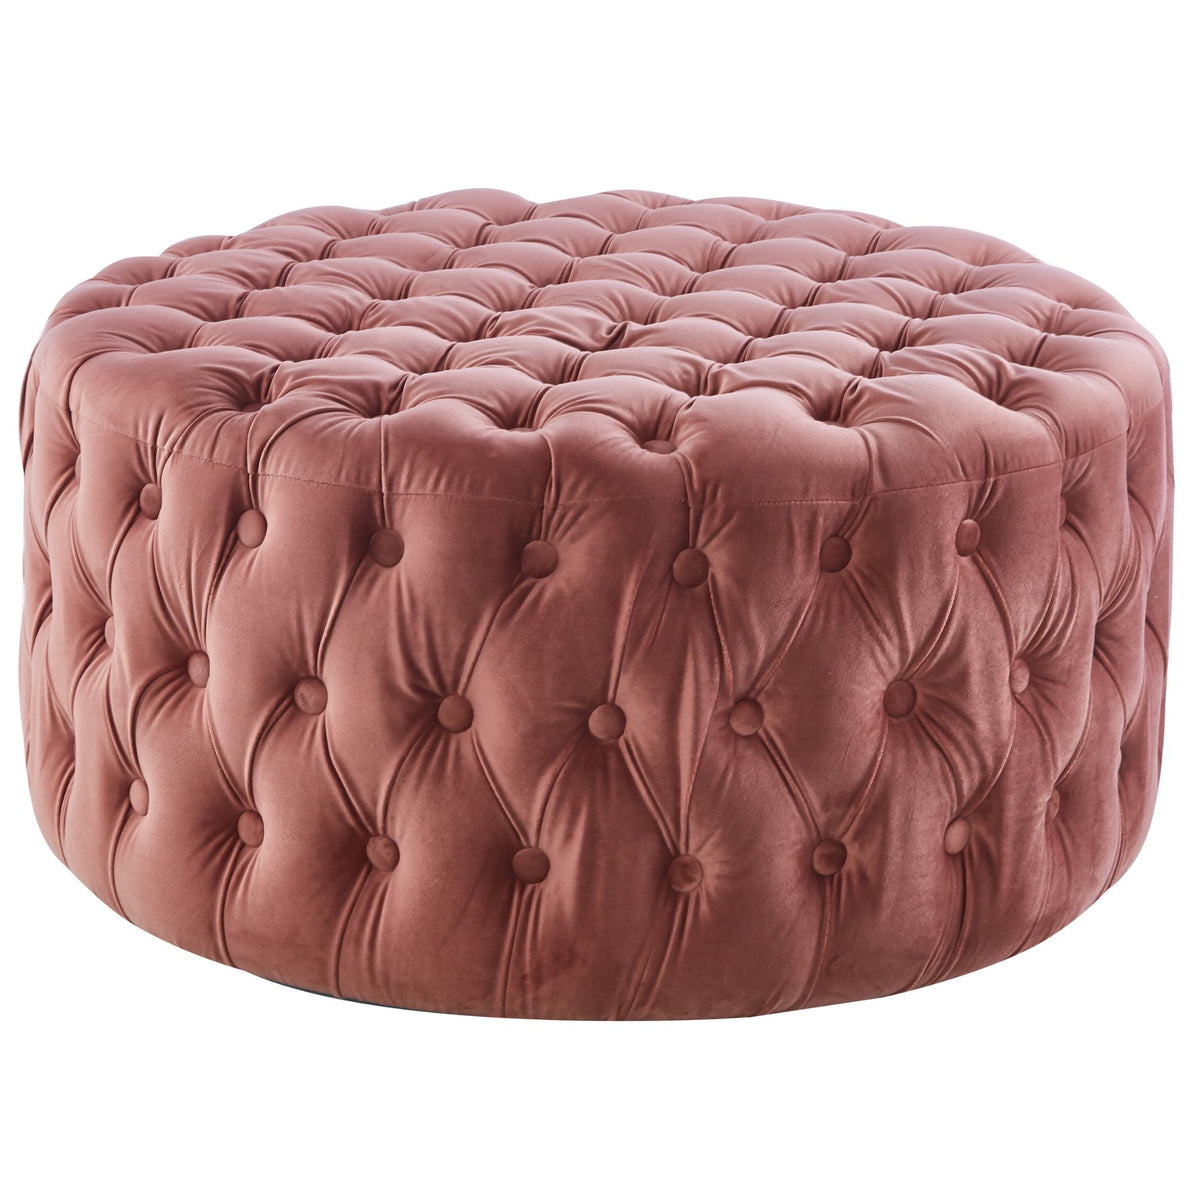 Uzona Tufted Velvet Fabric Round Ottoman Footstools - Rose Pink - Notbrand